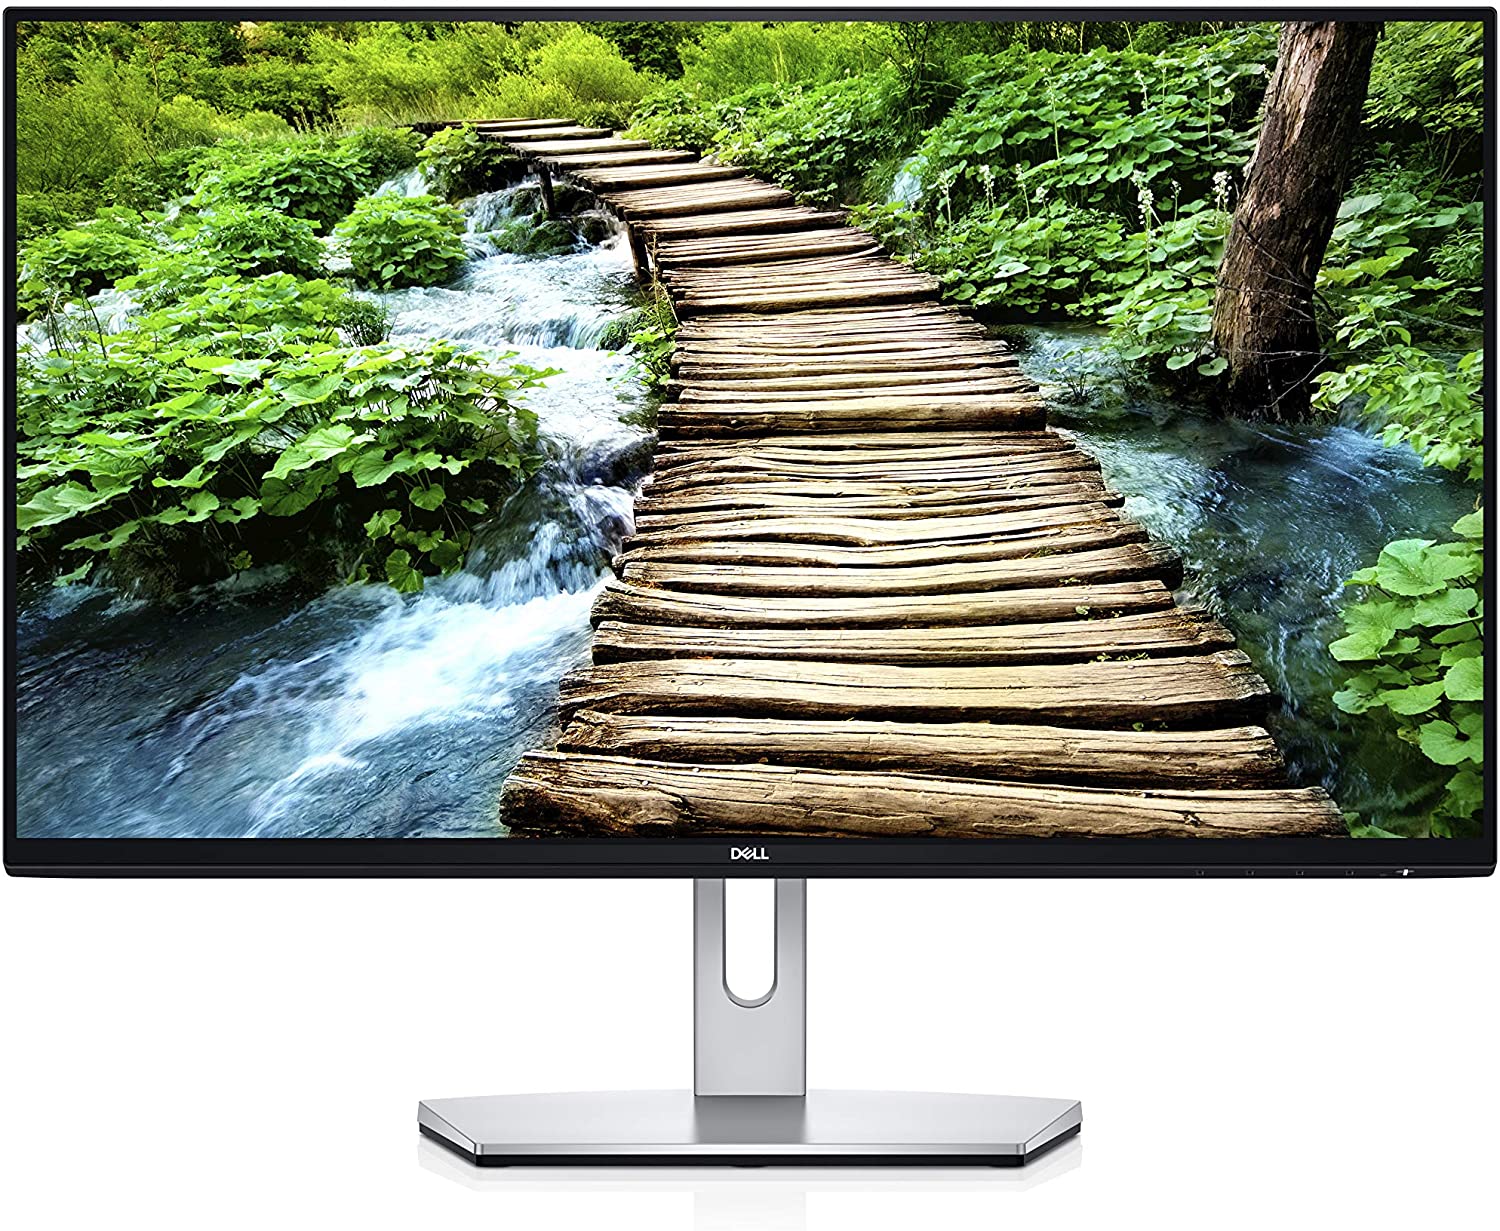 El monitor Dell S2419H serie S con un fondo de escritorio con una escena natural.